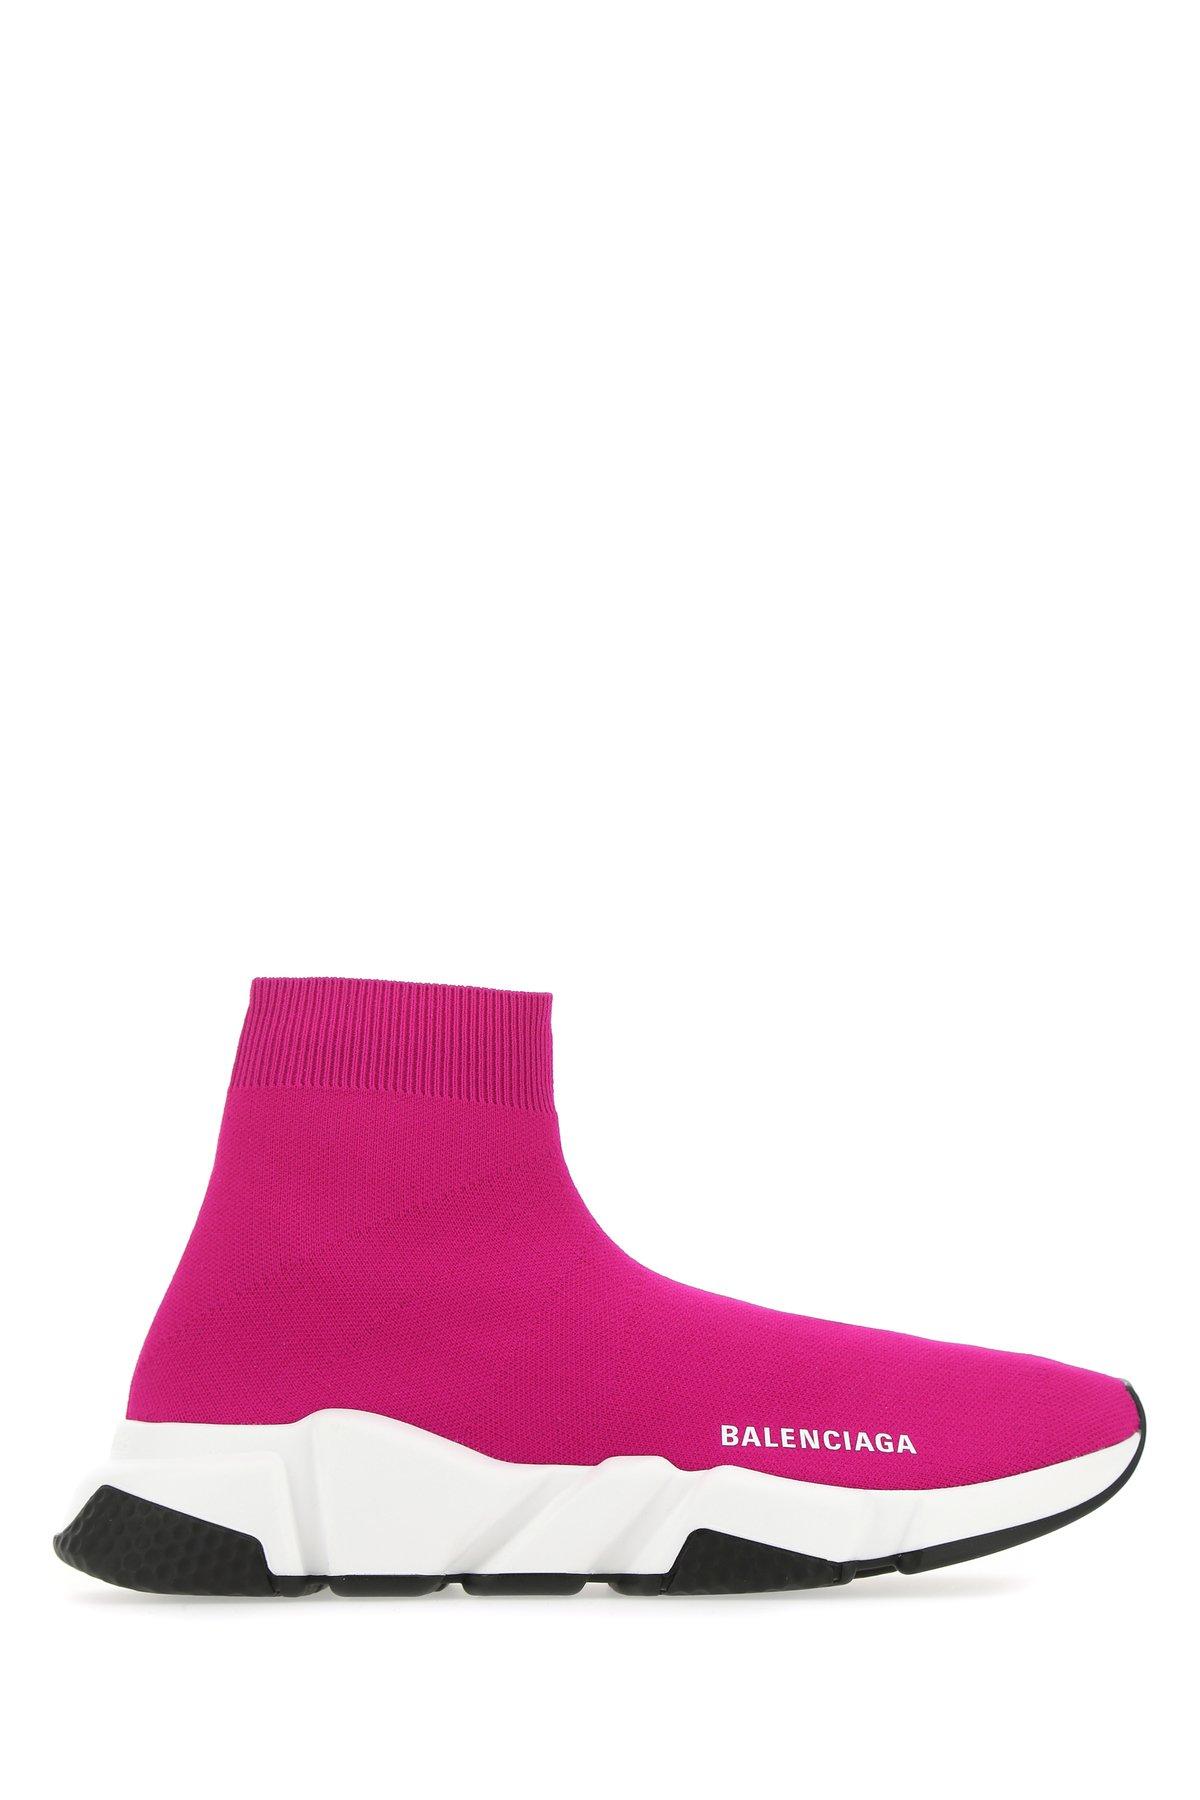 Triple S Sneakers in Pink  Balenciaga  Mytheresa